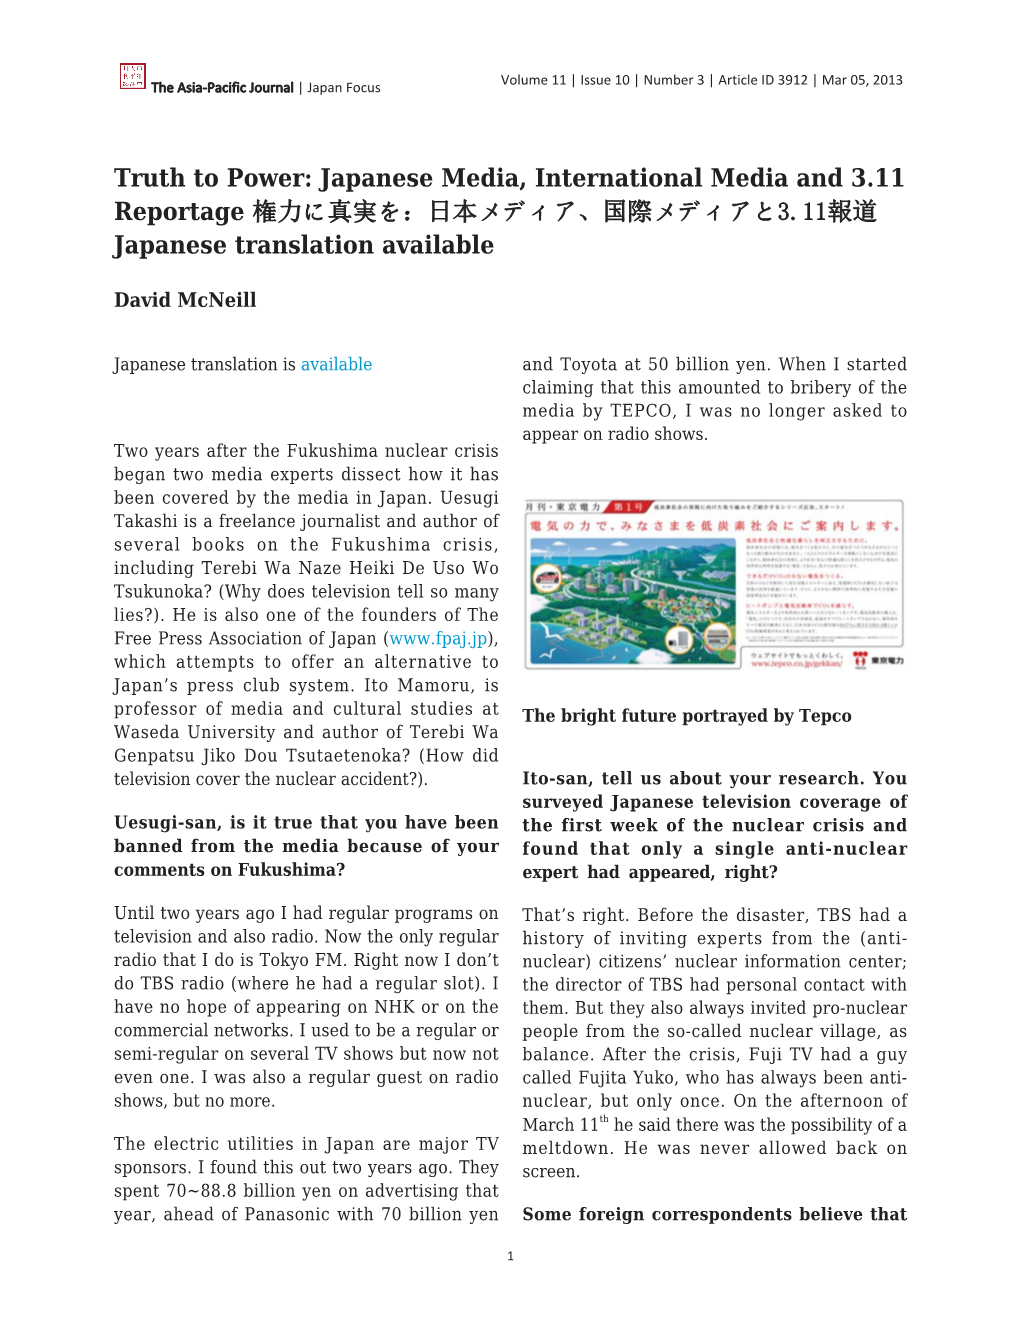 Truth to Power: Japanese Media, International Media and 3.11 Reportage 権力に真実を：日本メディア、国際メディアと3.11報道 Japanese Translation Available